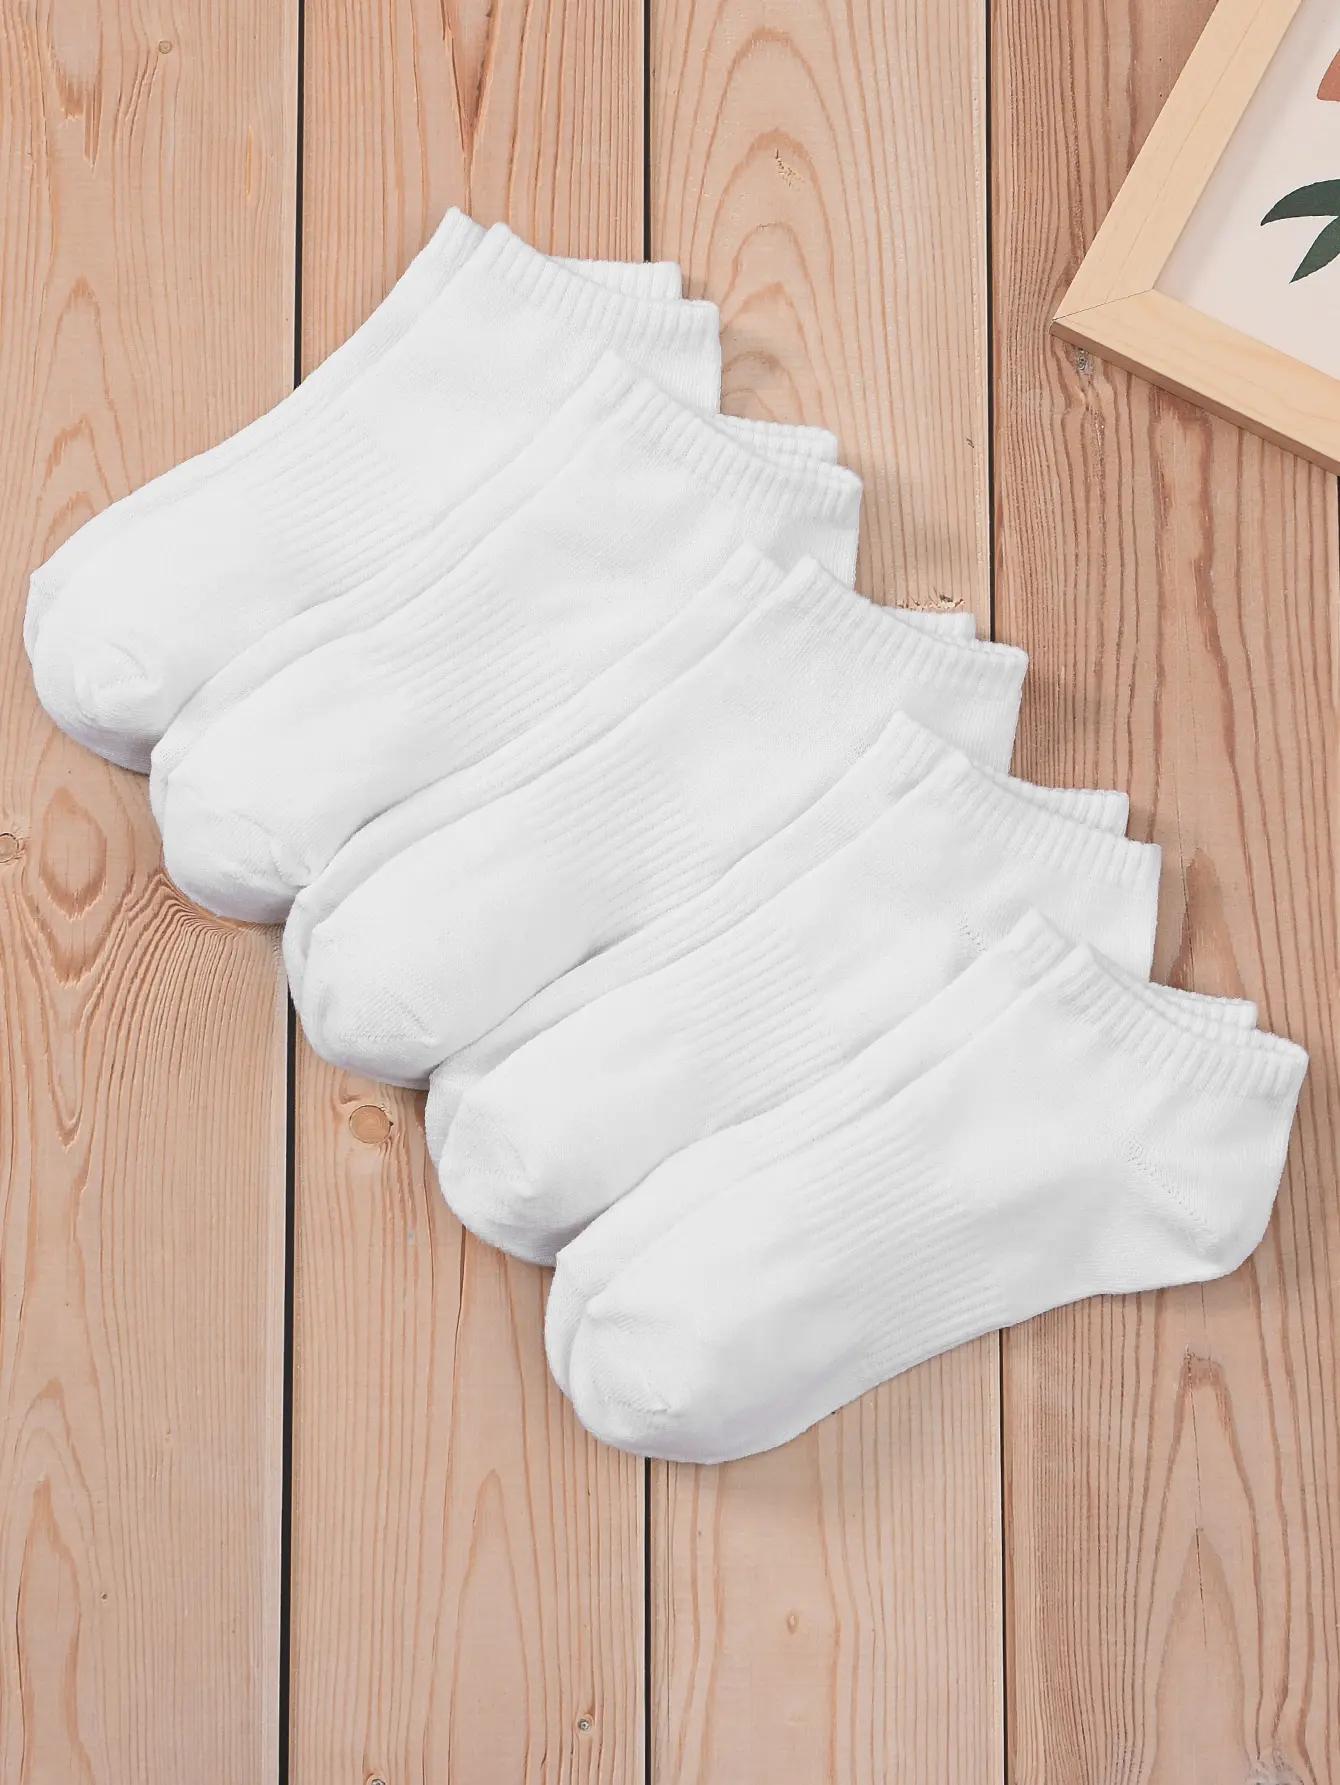 2023 New 5 Pairs/Lot Summer Women Men White Color Short Socks Low Tube Cool Socks Set Ankle Foot Cover Fashion New S